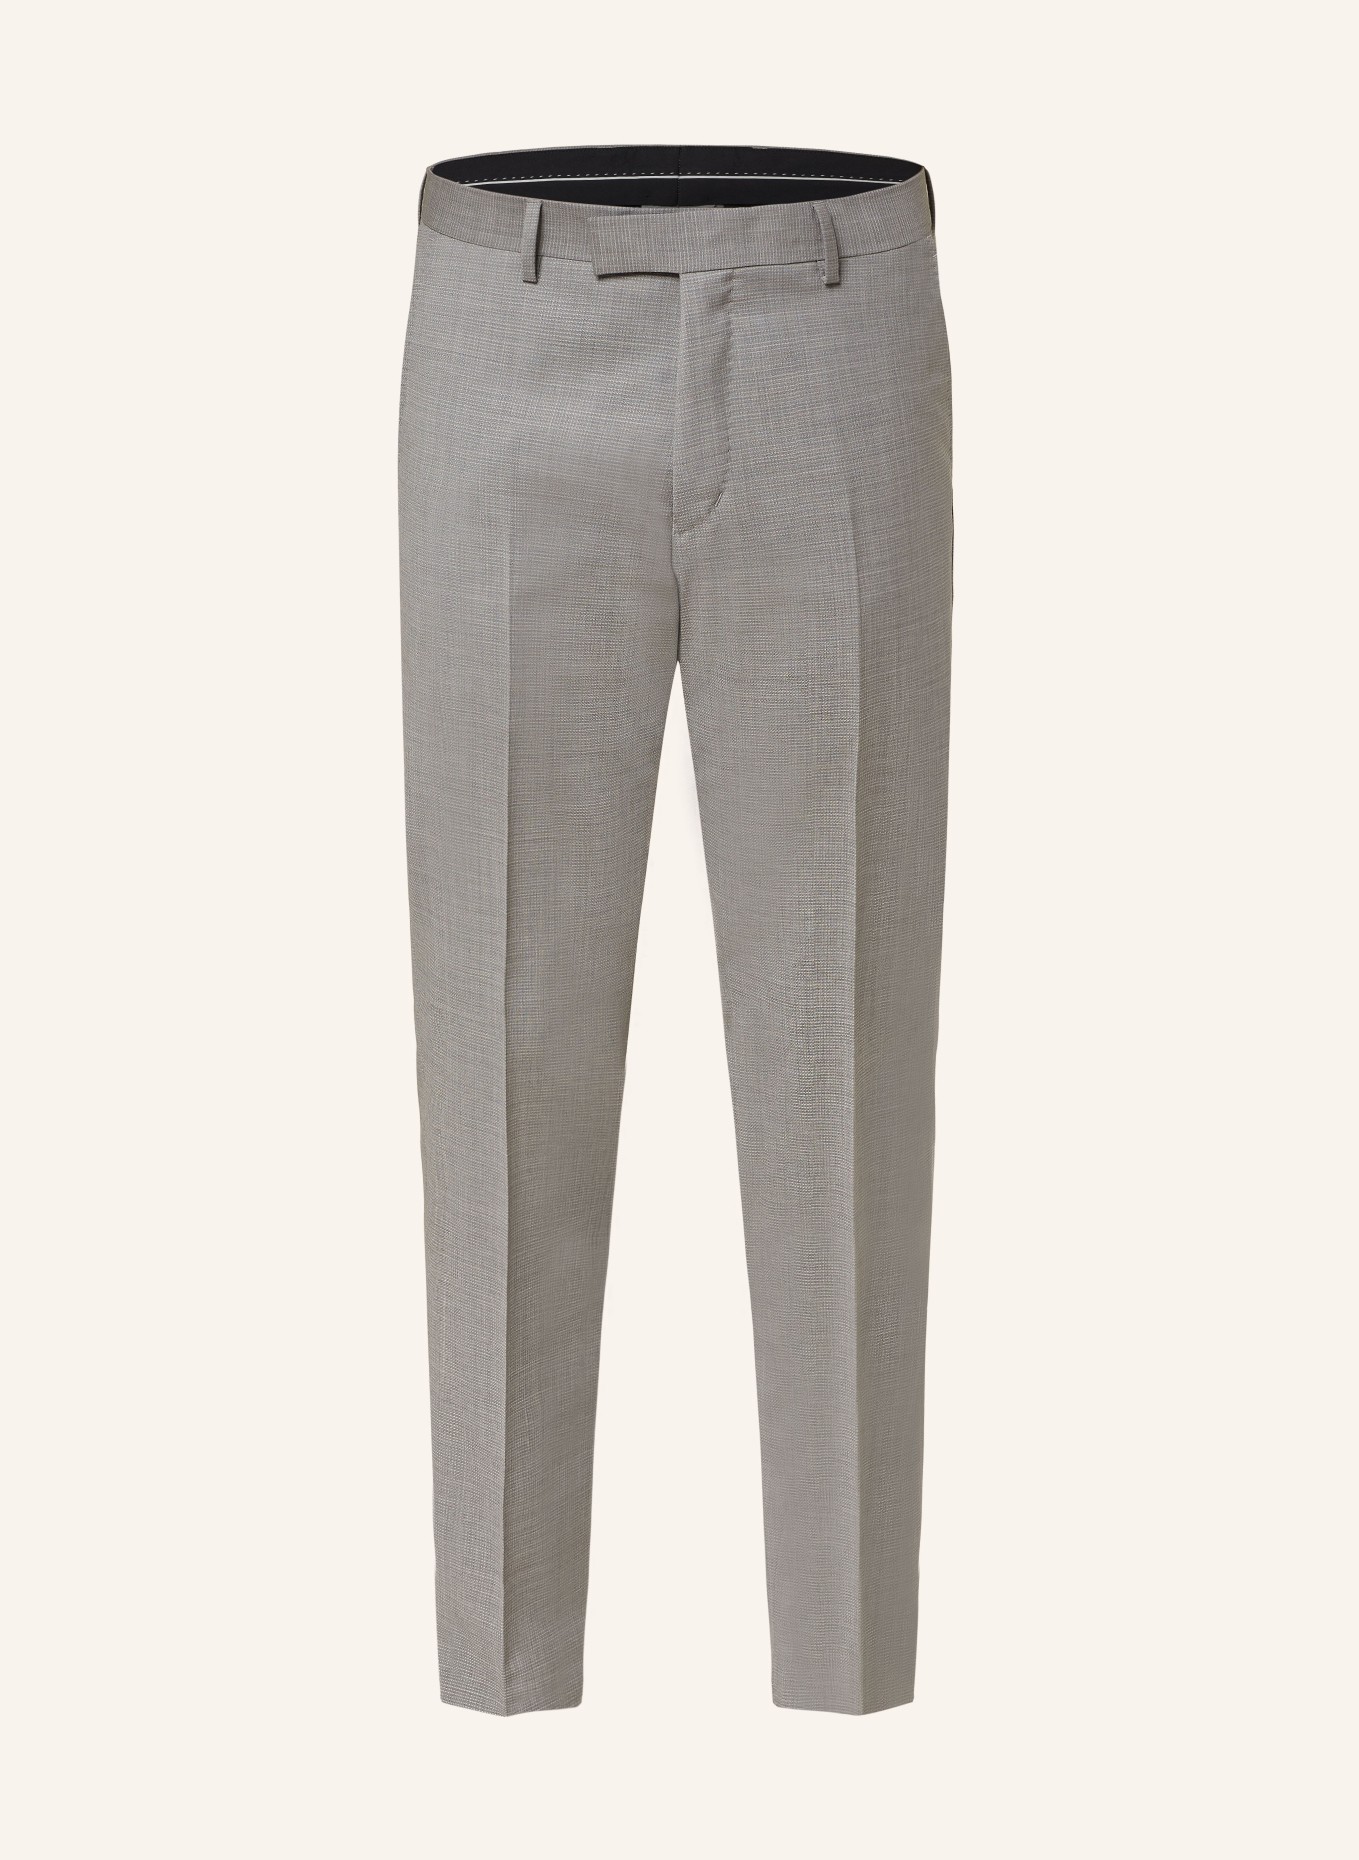 TIGER OF SWEDEN Anzughose TENUTA Slim Fit, Farbe: M04 Light Grey Melange (Bild 1)